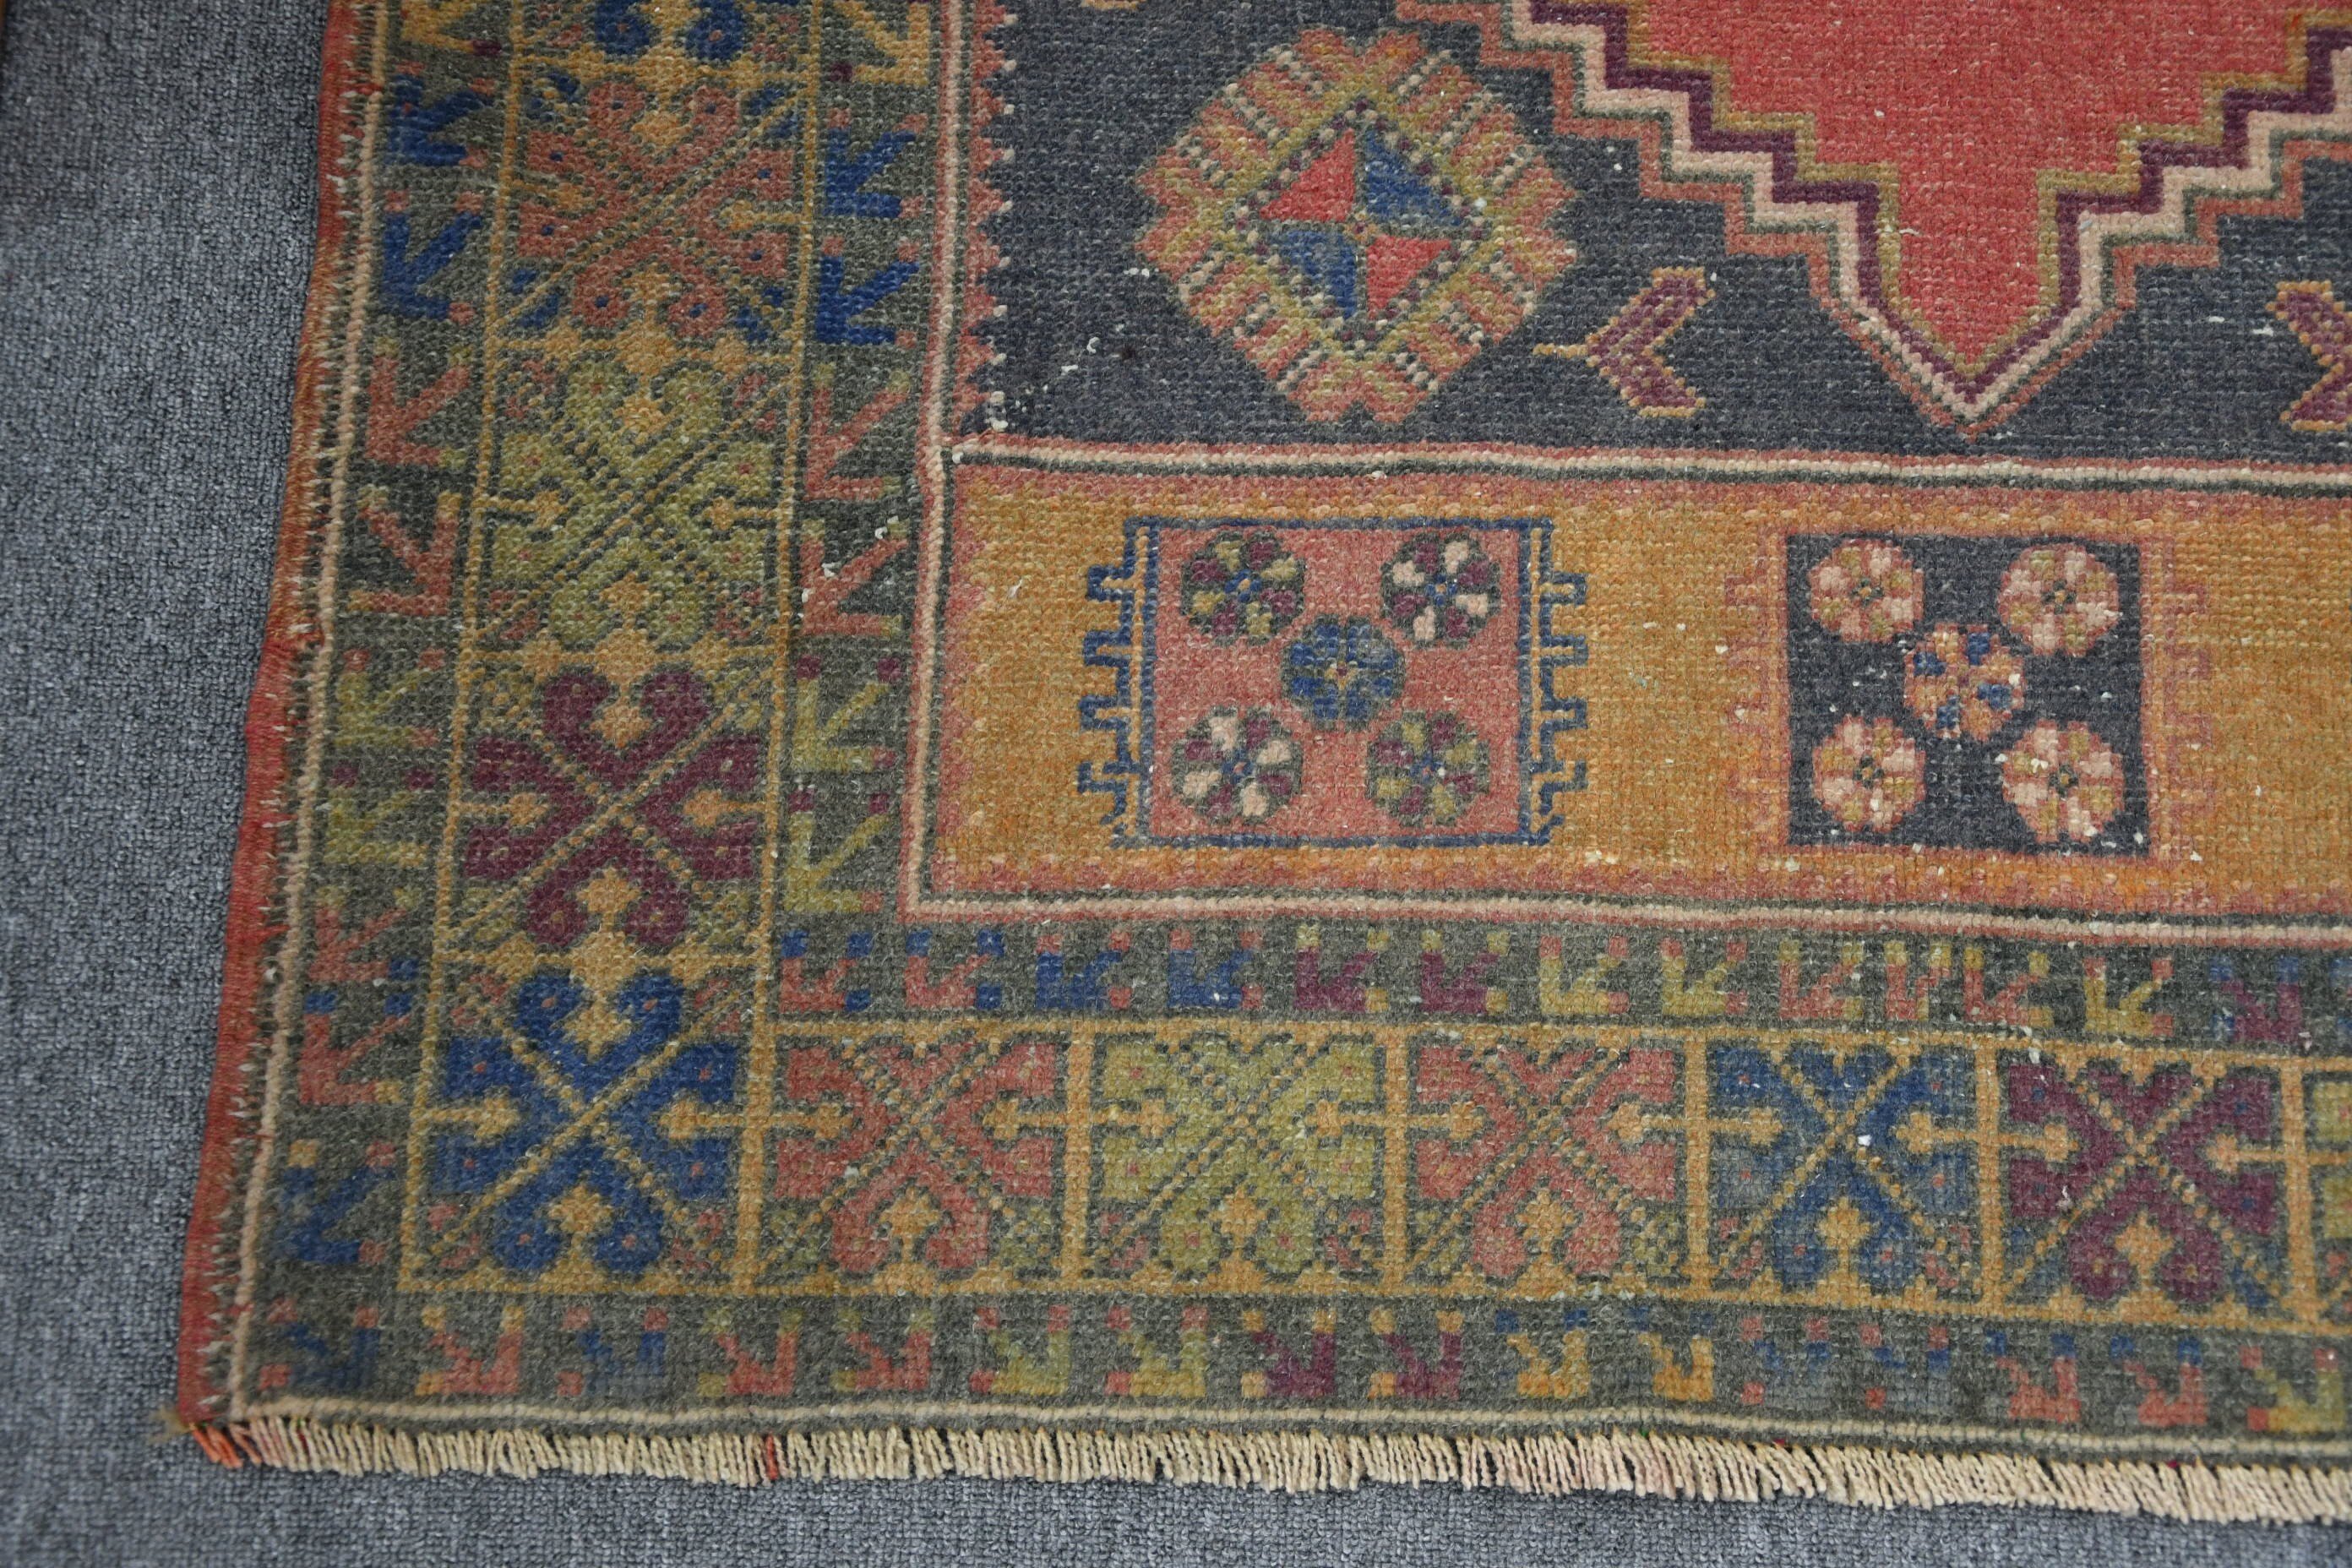 Nursery Rugs, Bedroom Rug, Colorful Rug, Moroccan Rug, Vintage Rug, Entryway Rug Rugs, Turkish Rug, 3.8x5.4 ft Accent Rug, Rugs for Kitchen